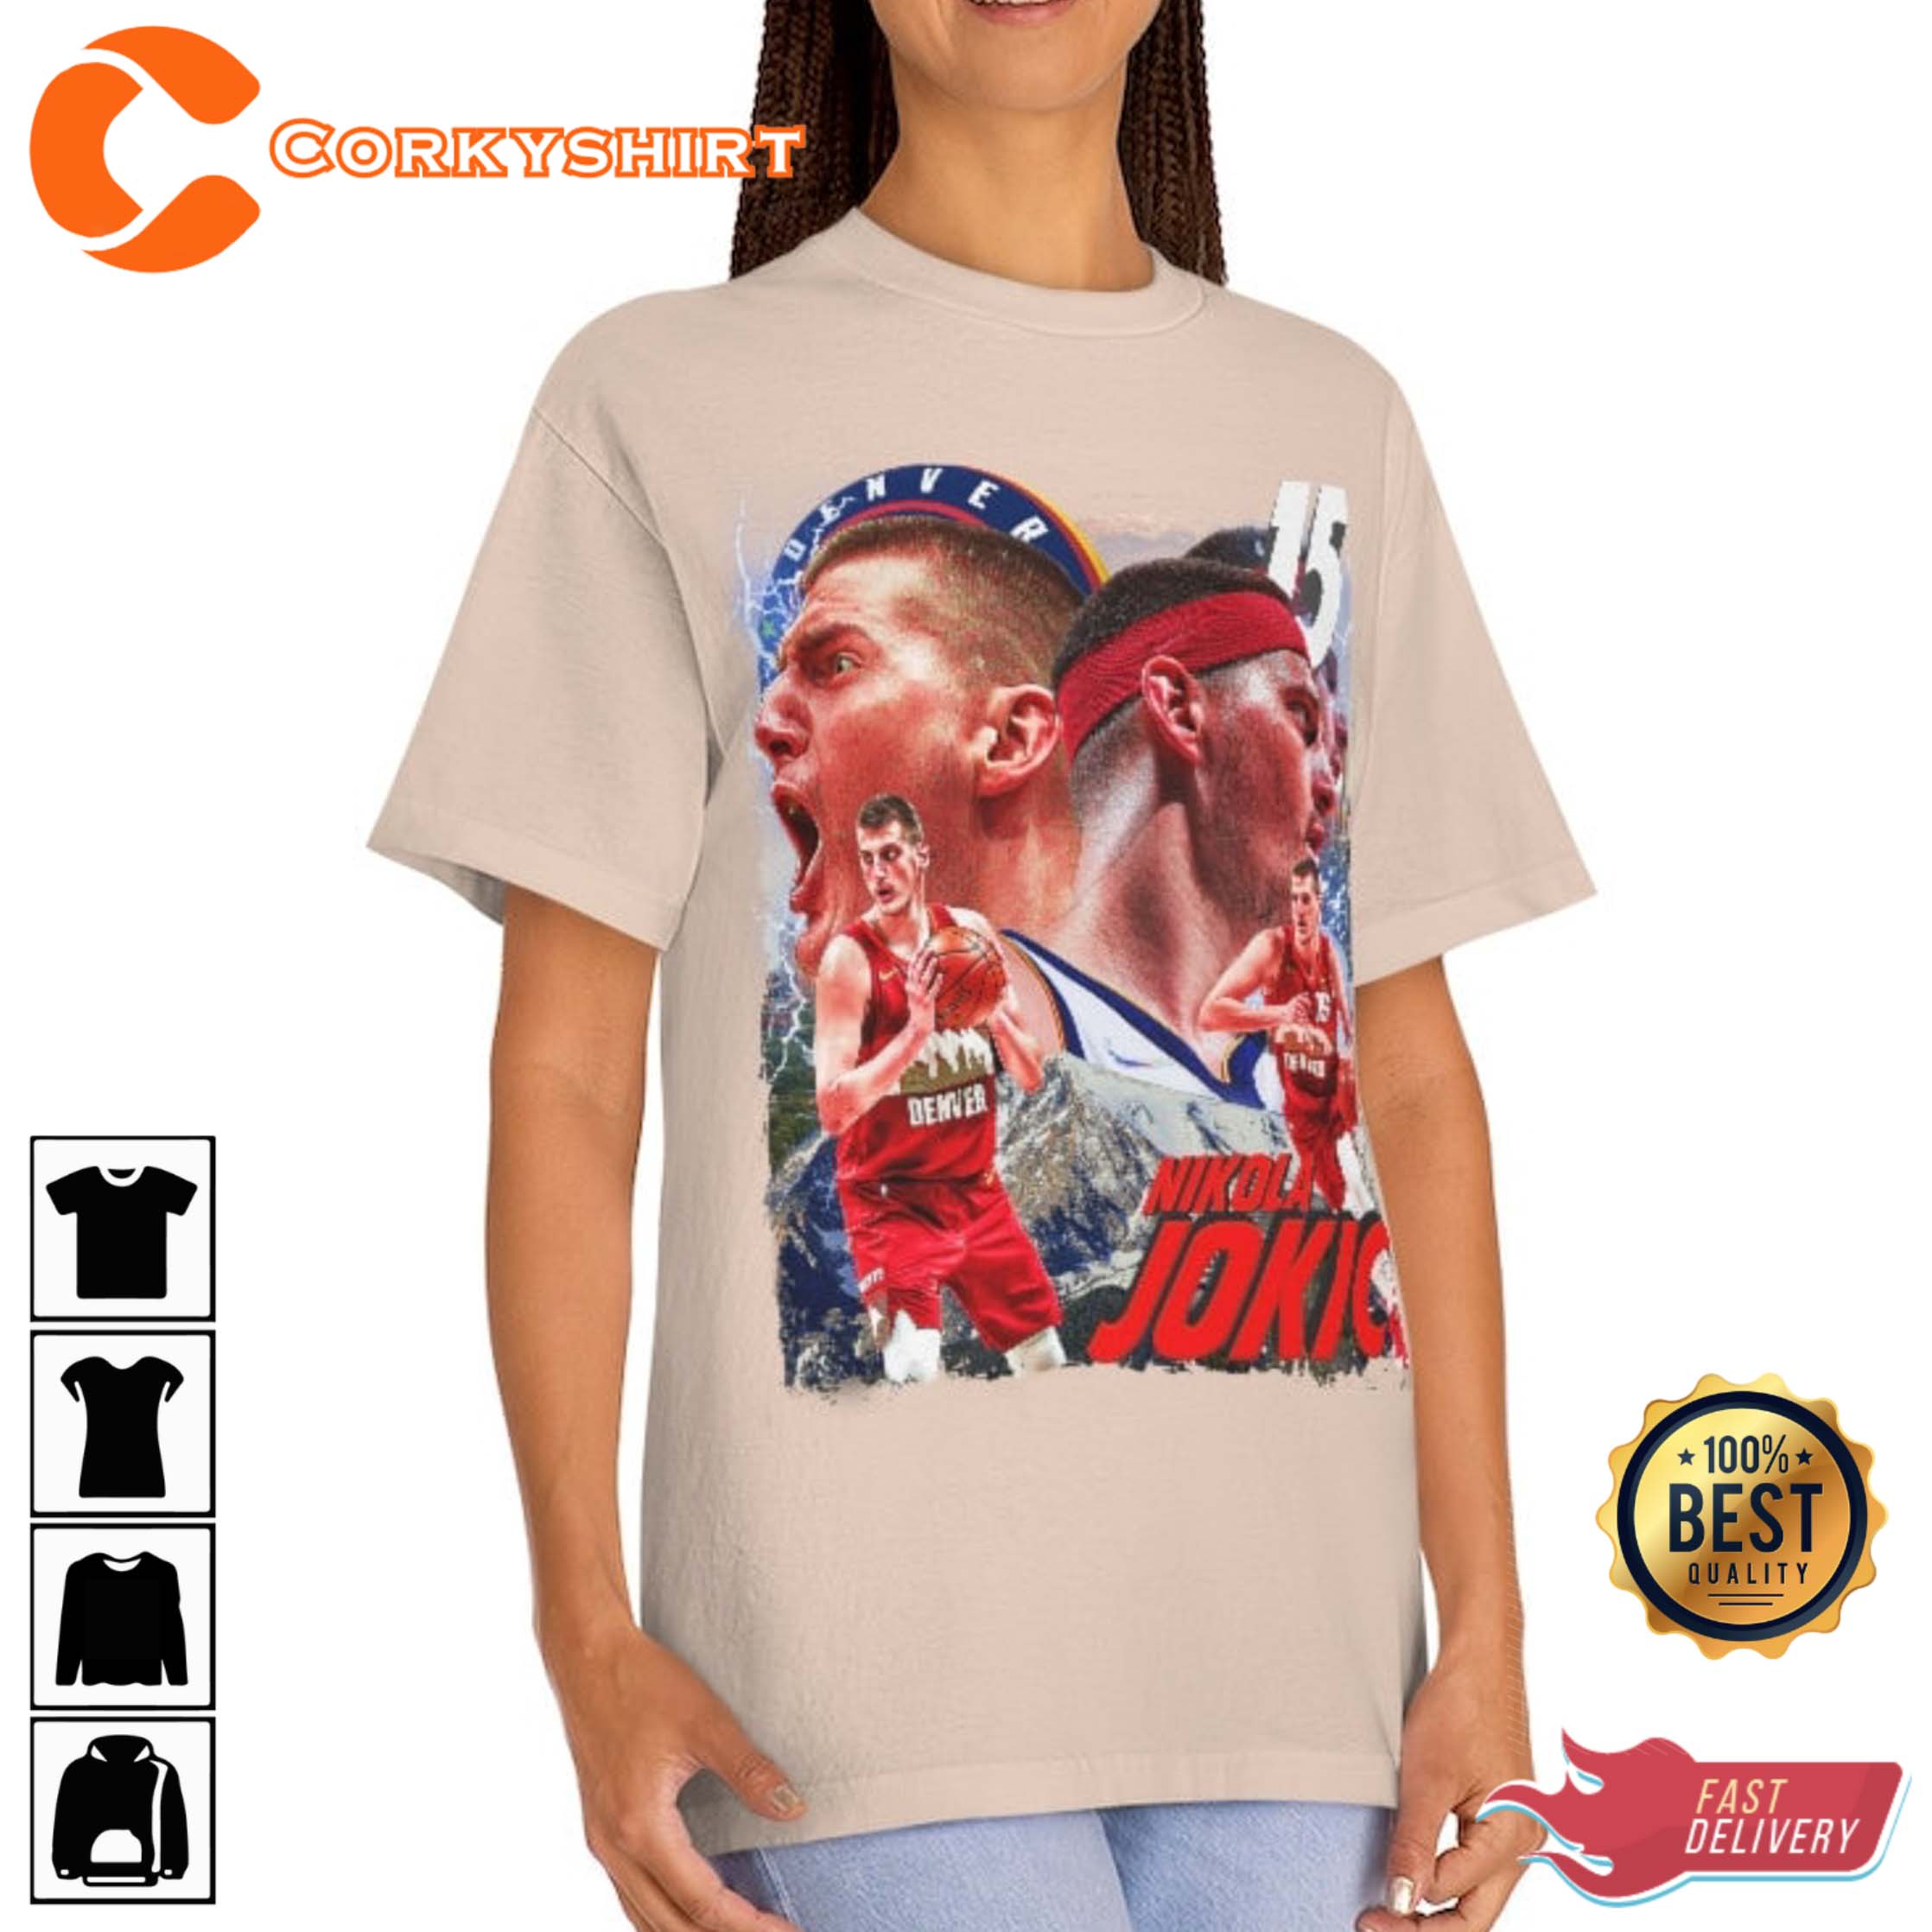 Vintage NBA Denver Nuggets Finals Shirt, Sweatshirt, Merch Gift For Fans  Basketball - Family Gift Ideas That Everyone Will Enjoy